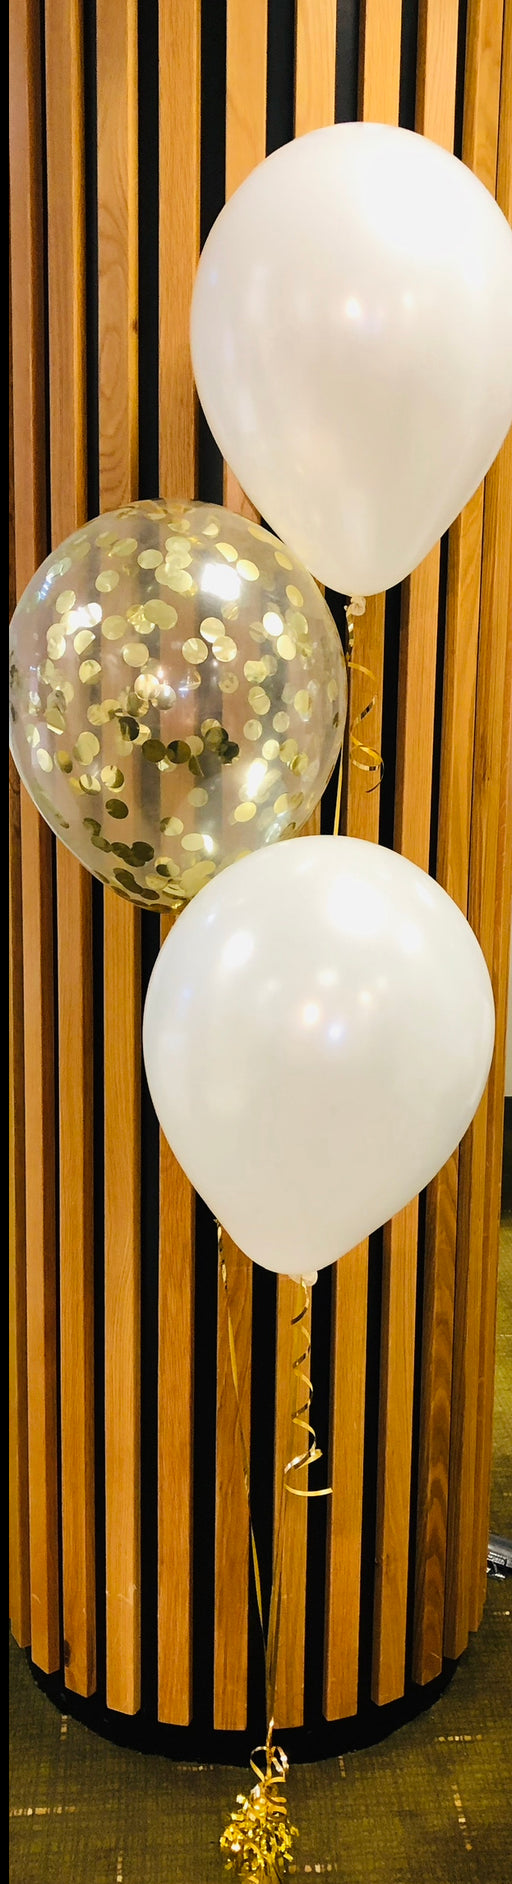 16” Latex Confetti Balloon Display